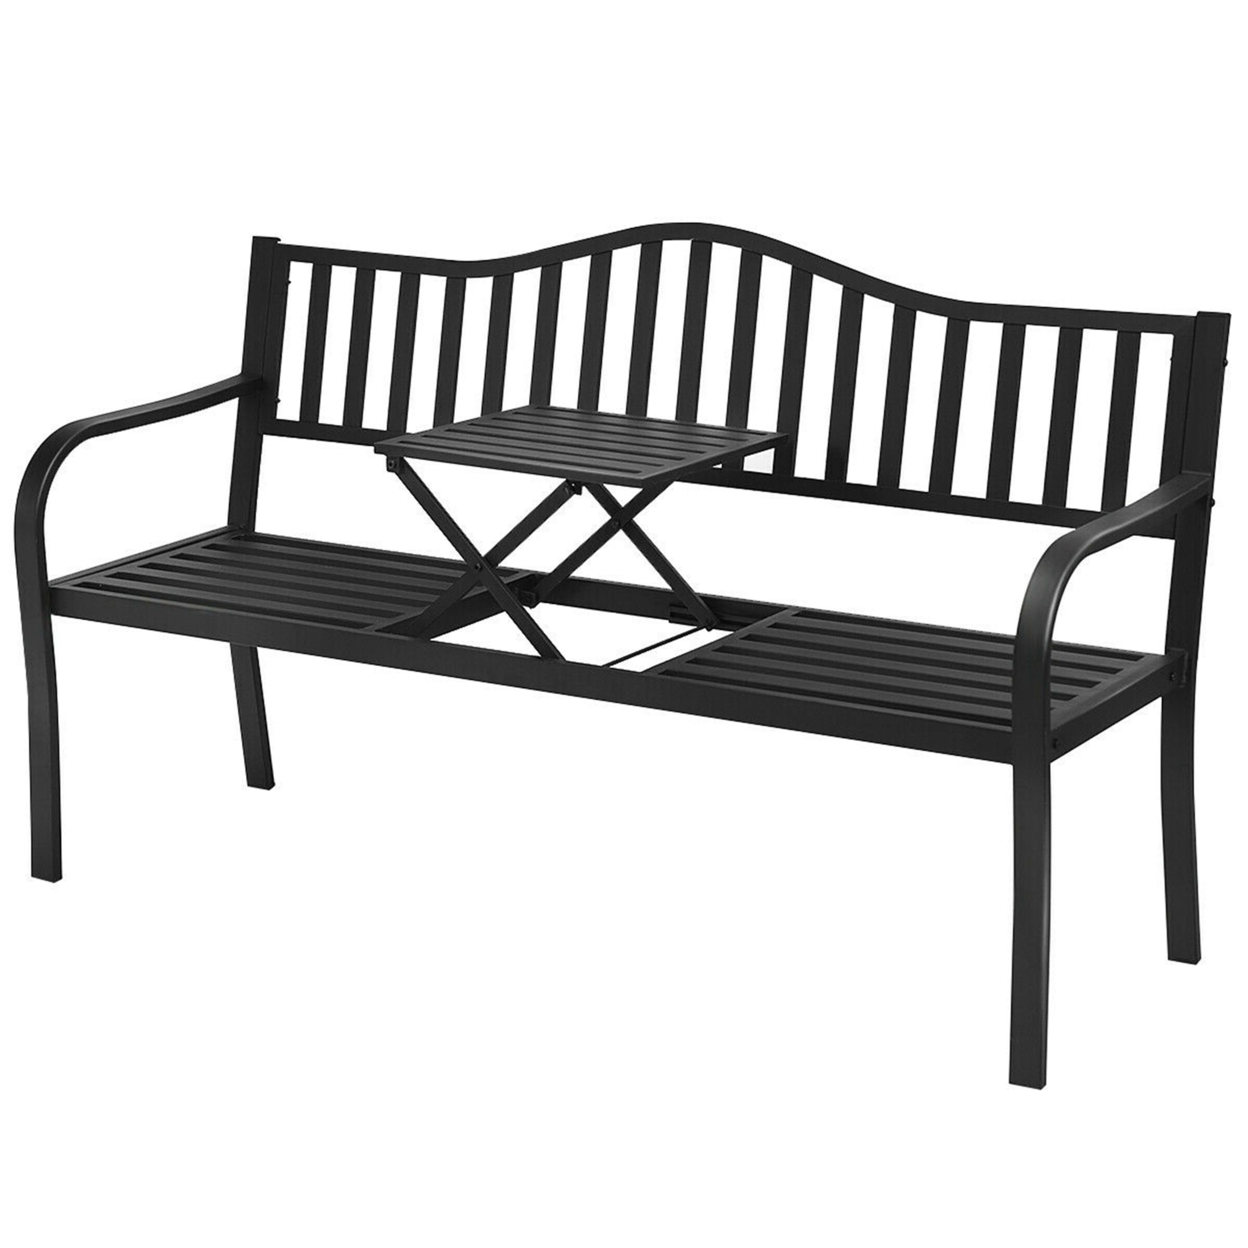 Park Yard Garden Bench Loveseat Outdoor Furniture W/ Foldable Center Table